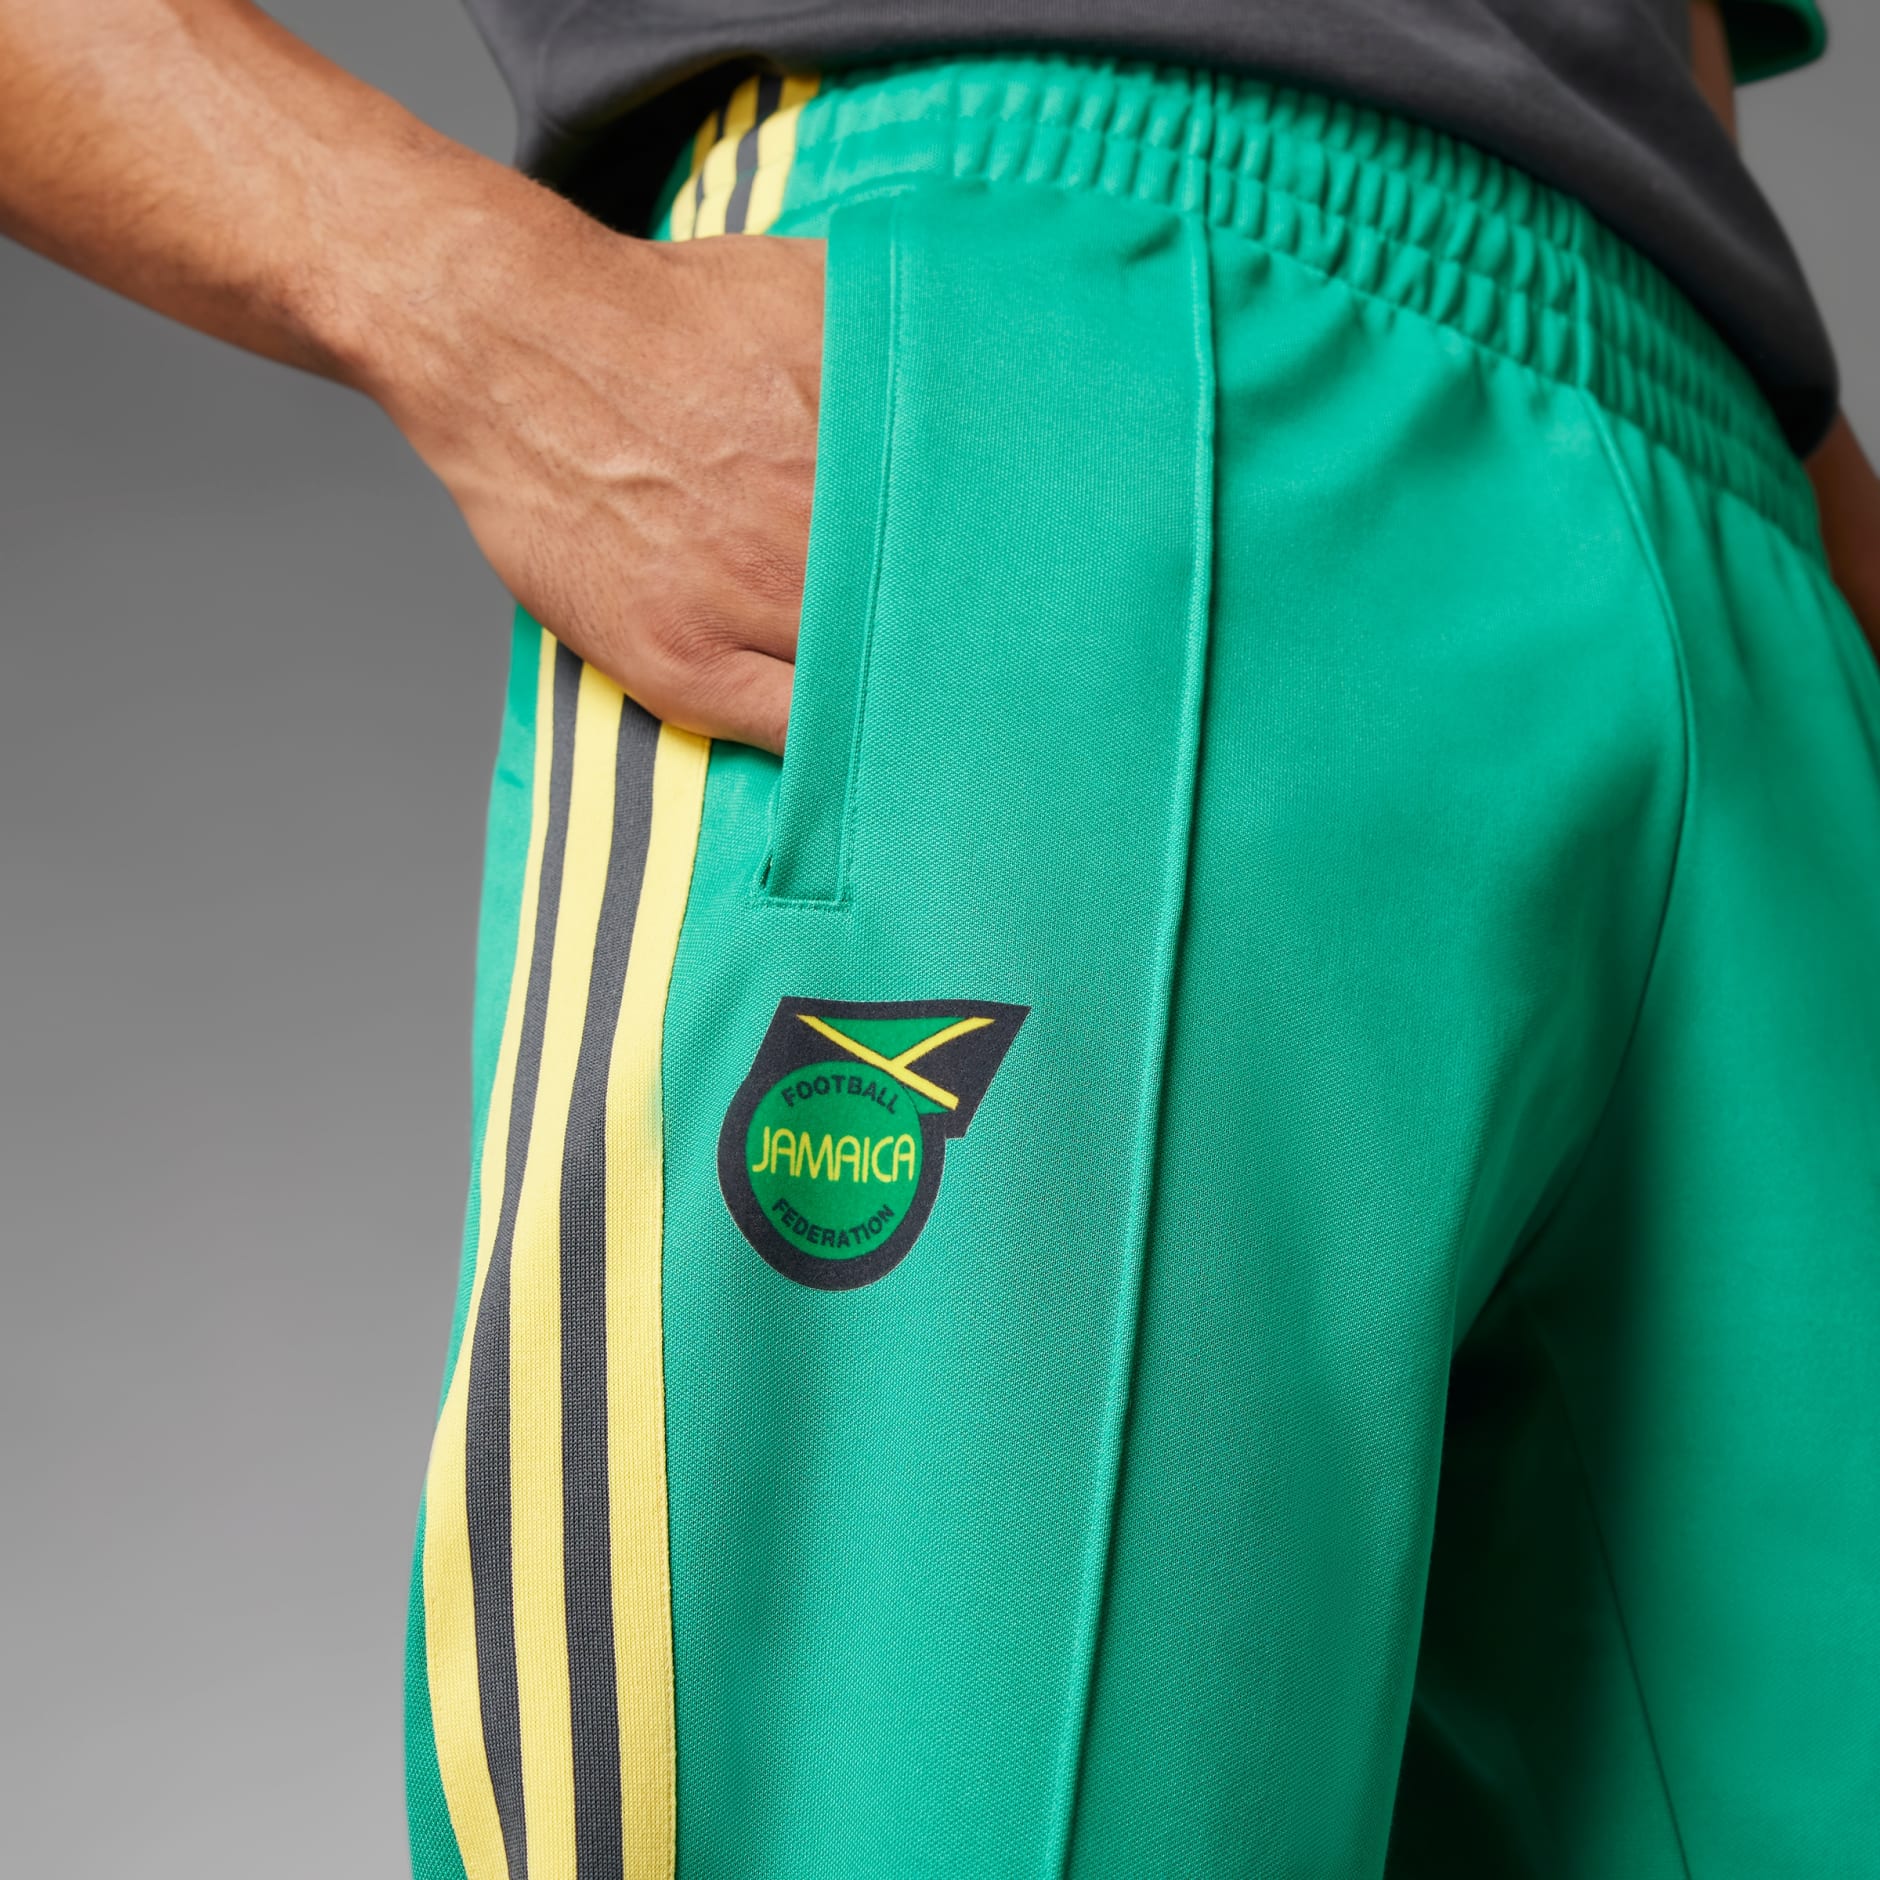 Men's Clothing - Jamaica Beckenbauer Track Pants - Green